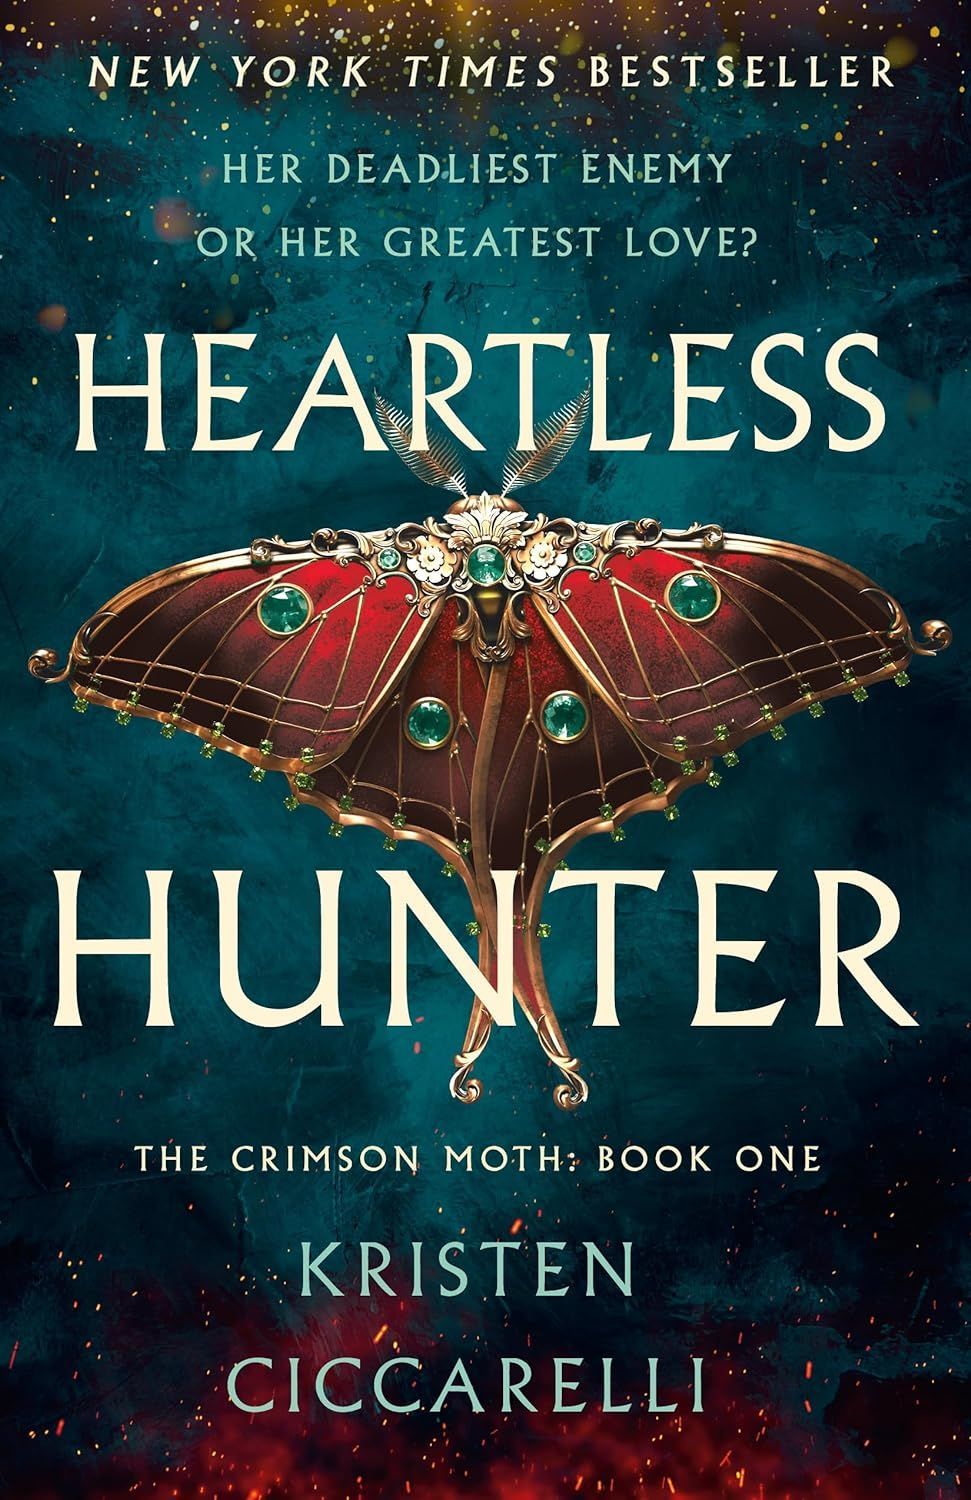 <i>Heartless Hunter</i> by Kristen Ciccarelli